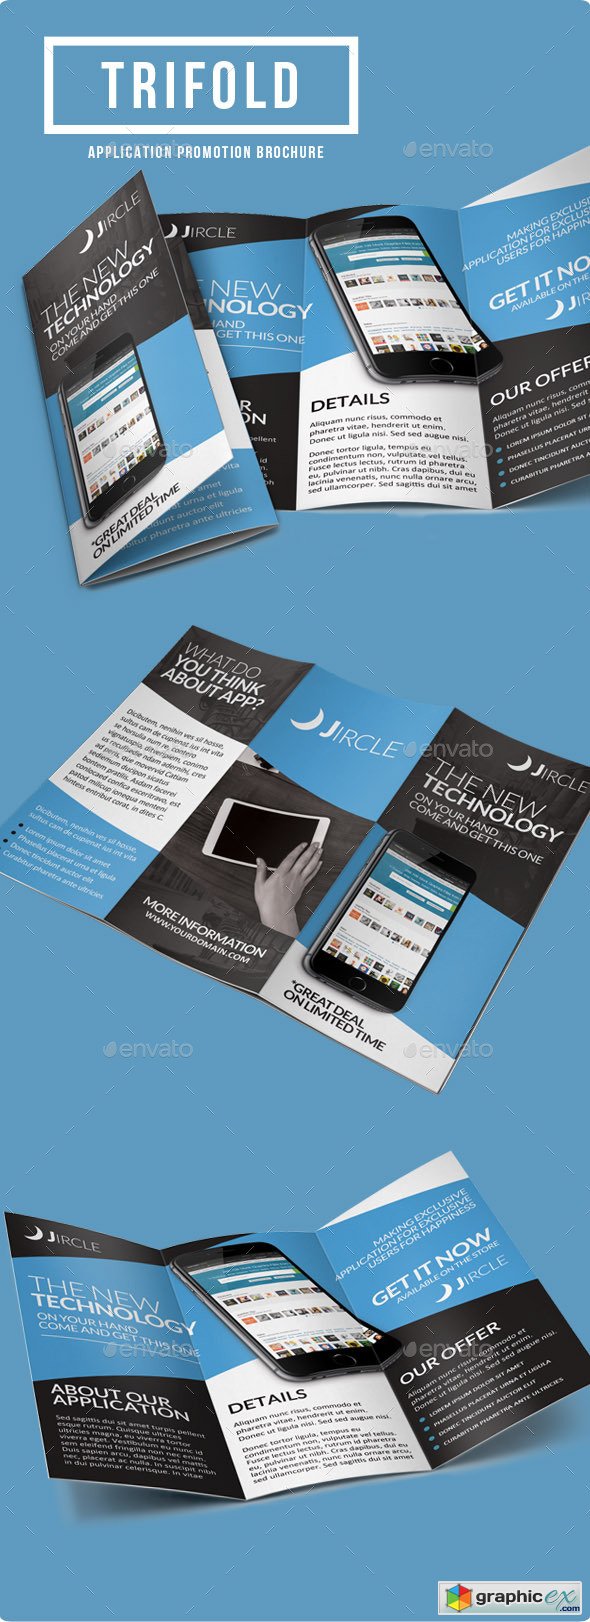 App Promotion Trifold Brochure